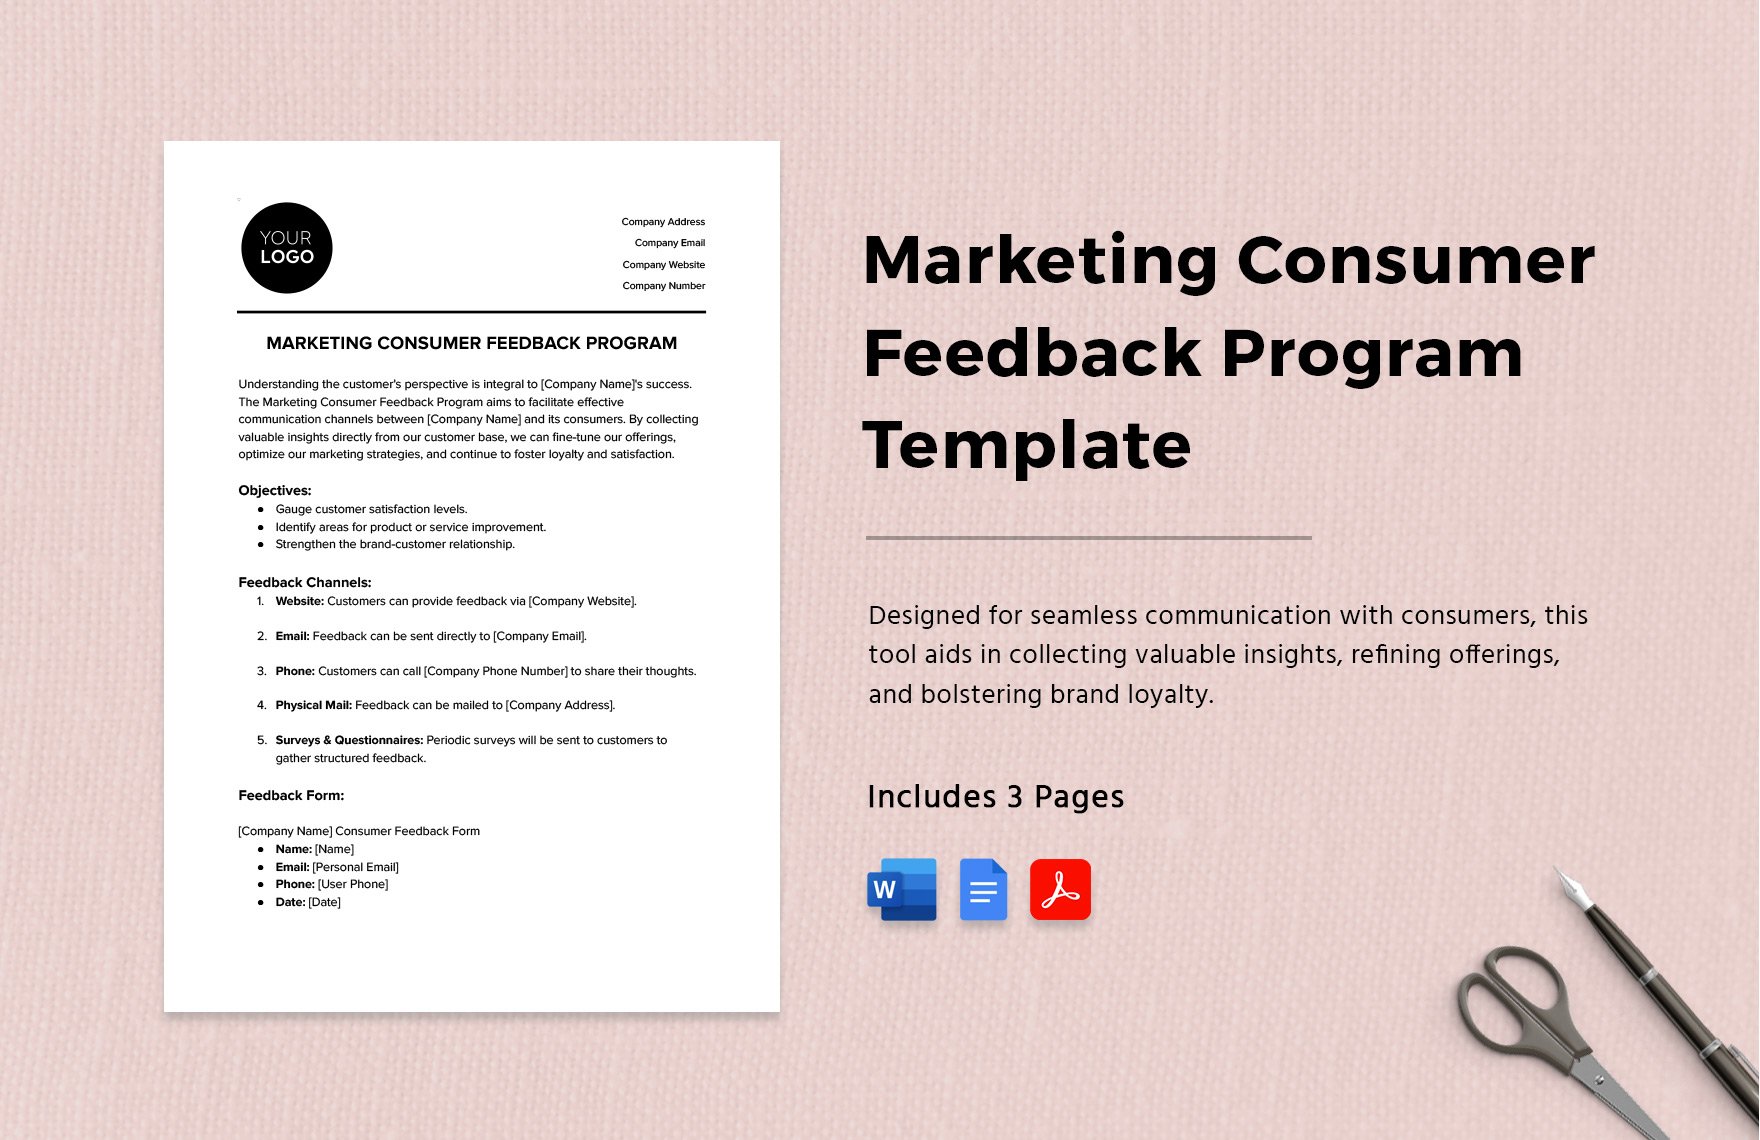 Marketing Consumer Feedback Program Template in Word, Google Docs, PDF